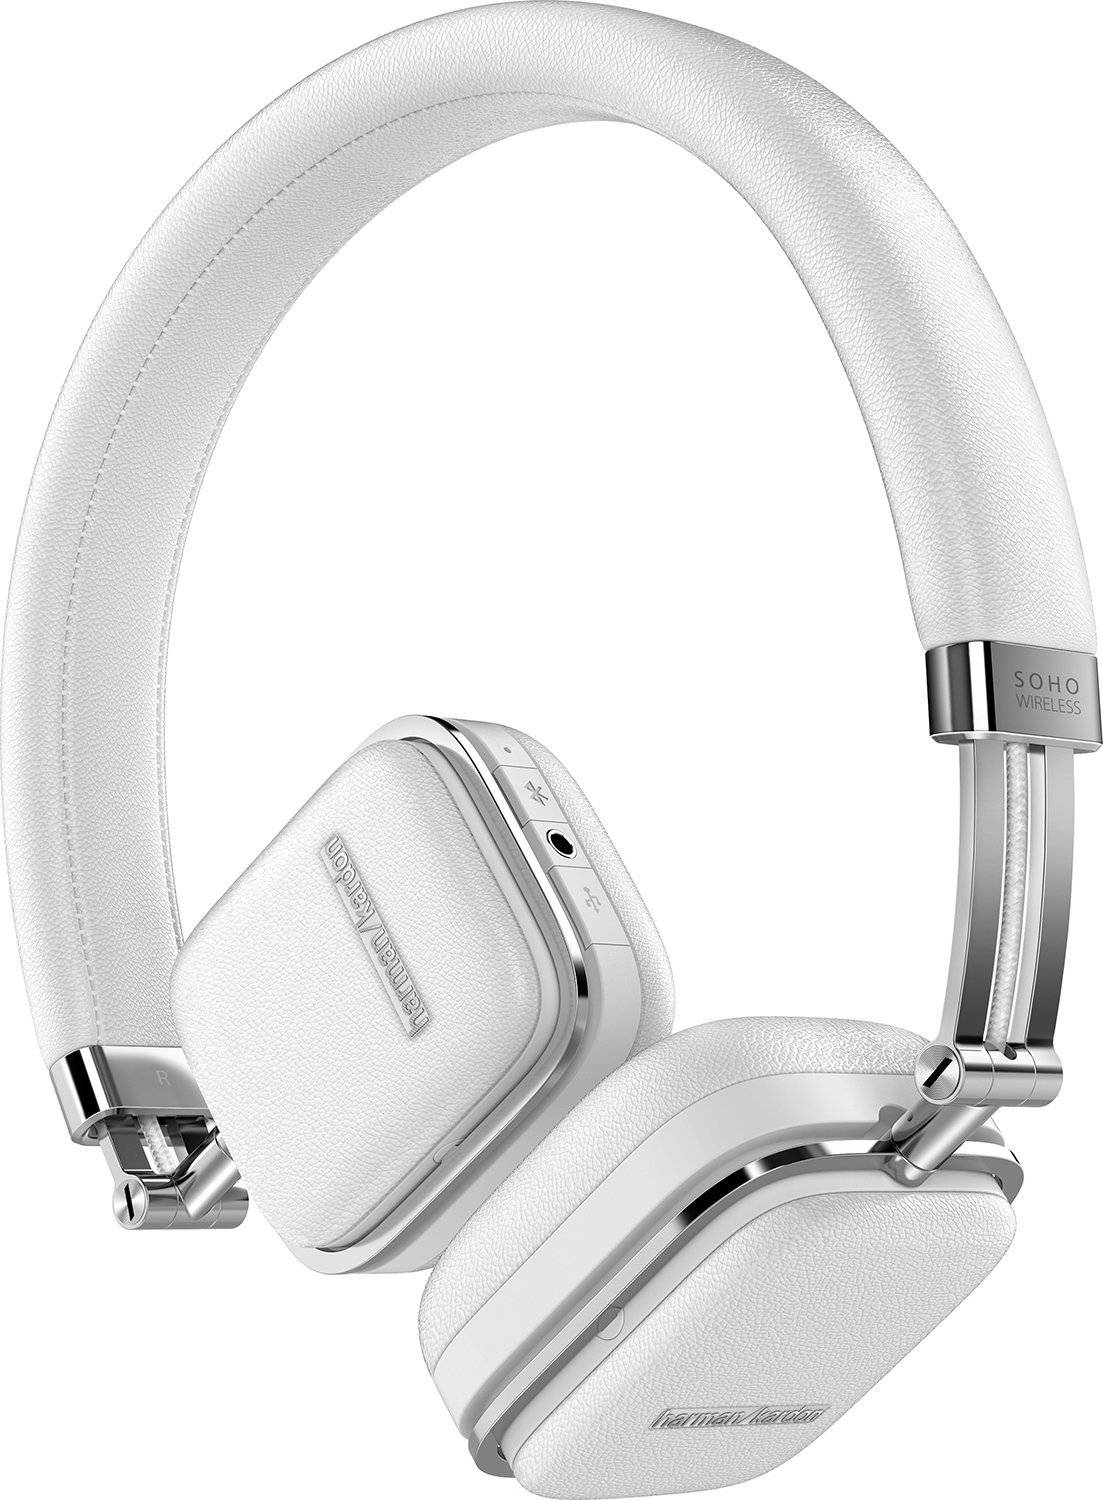 Drahtlose On-Ear-Kopfhörer Harman Kardon Soho Wireless White